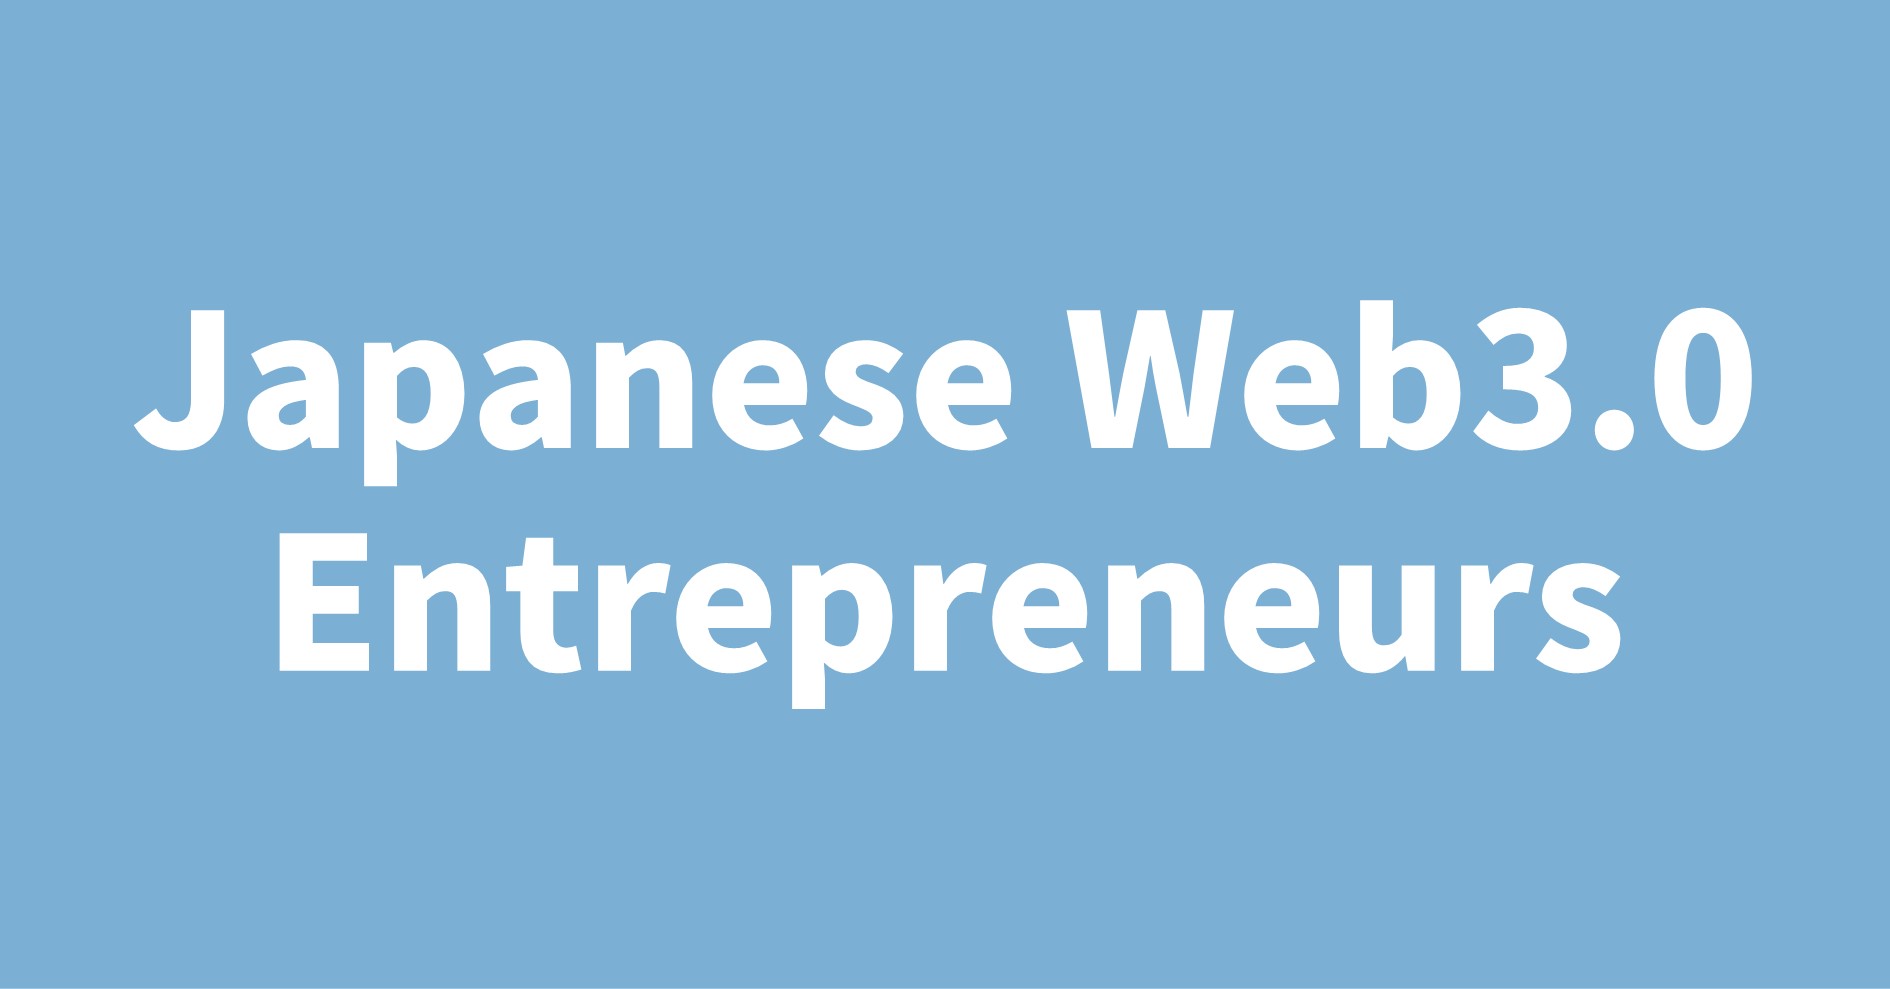 Japanese Web3.0 Entrepreneurs